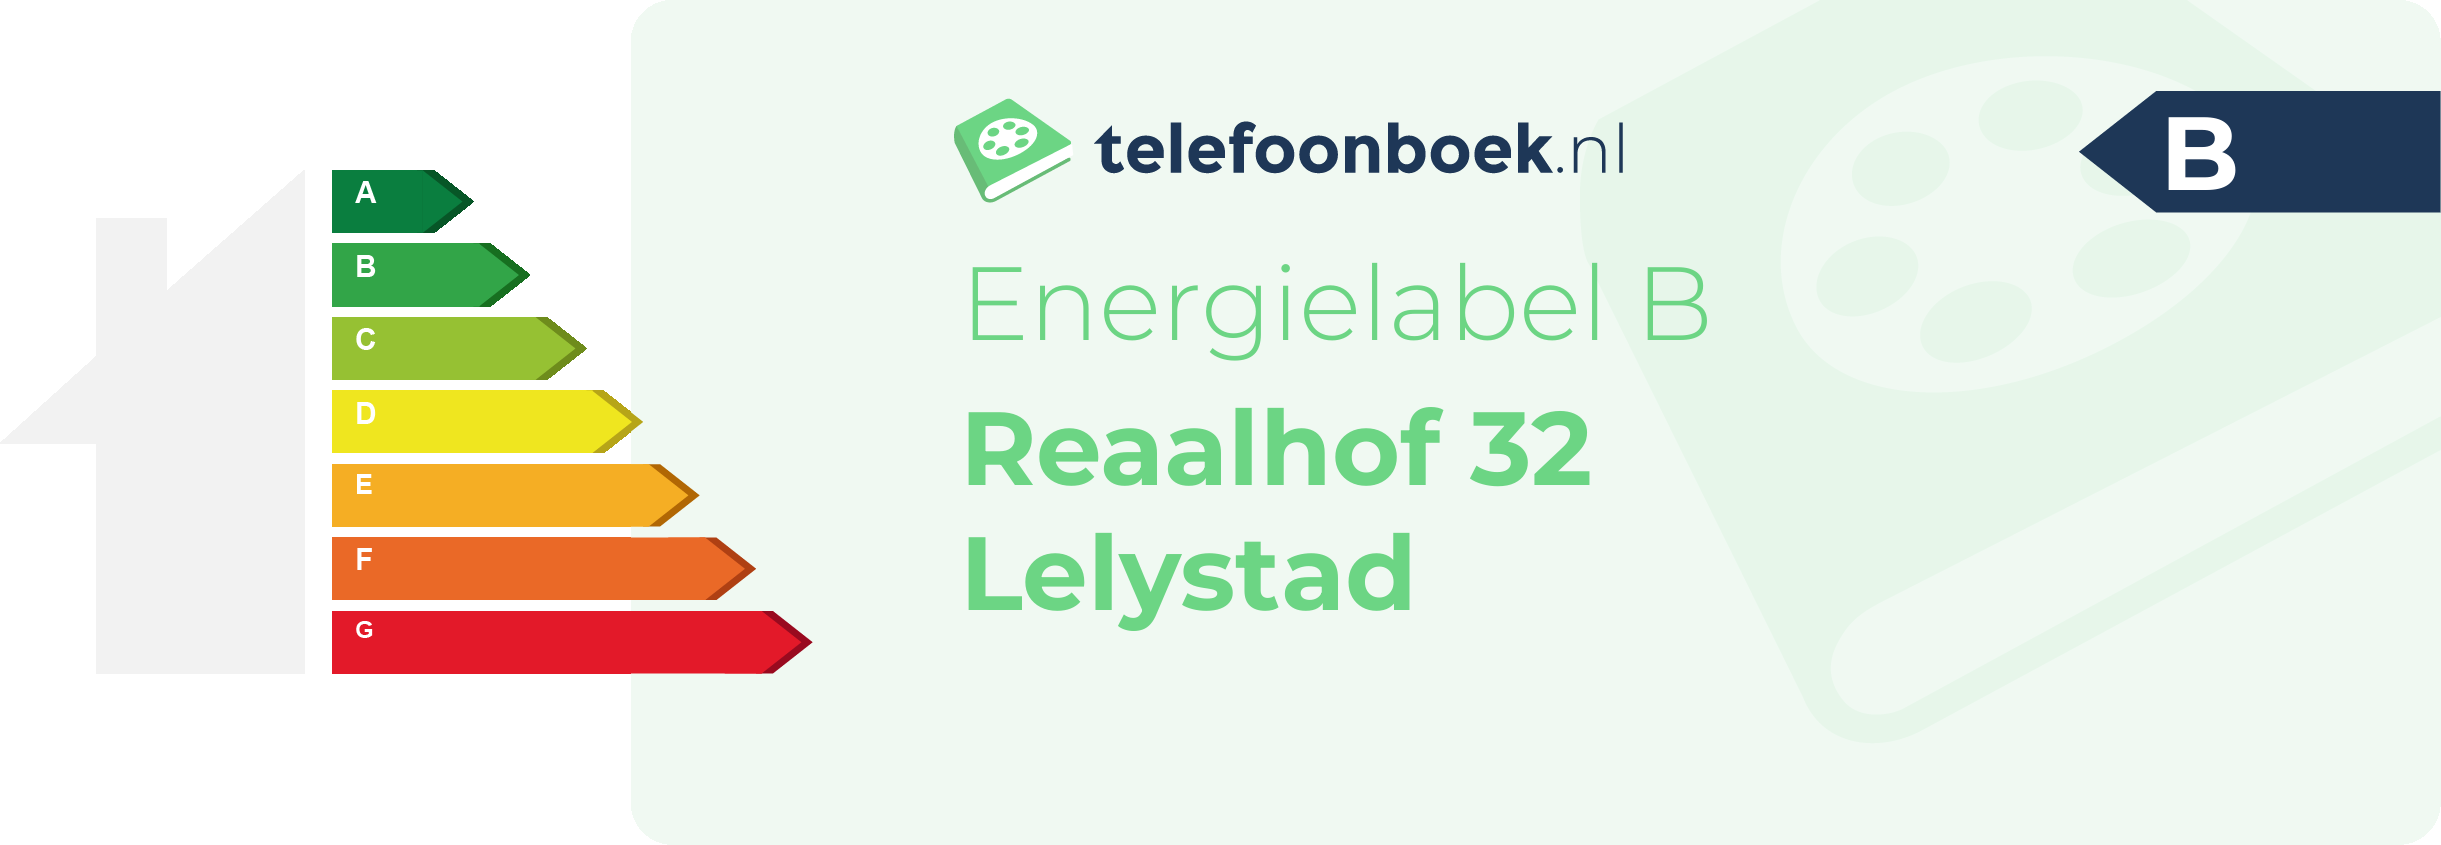 Energielabel Reaalhof 32 Lelystad